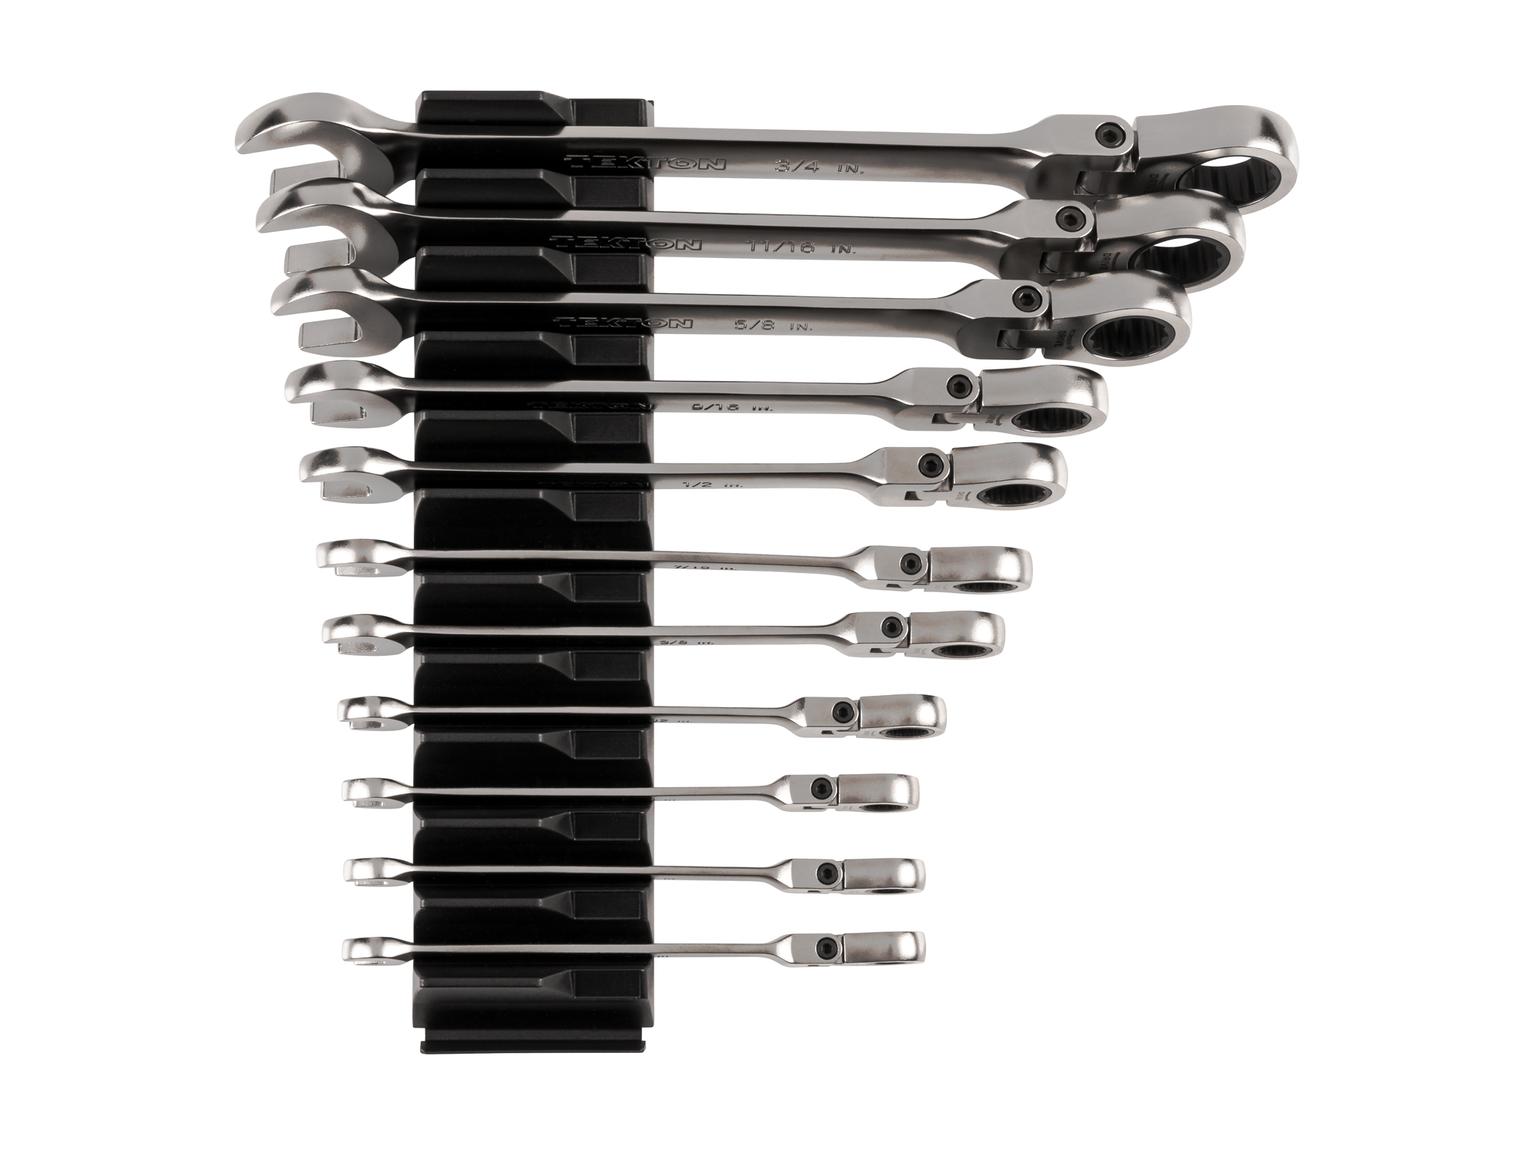 Flex Head 12-Point Ratcheting Combination Wrench Set, 11-Piece (Modular Wrench Organizer)